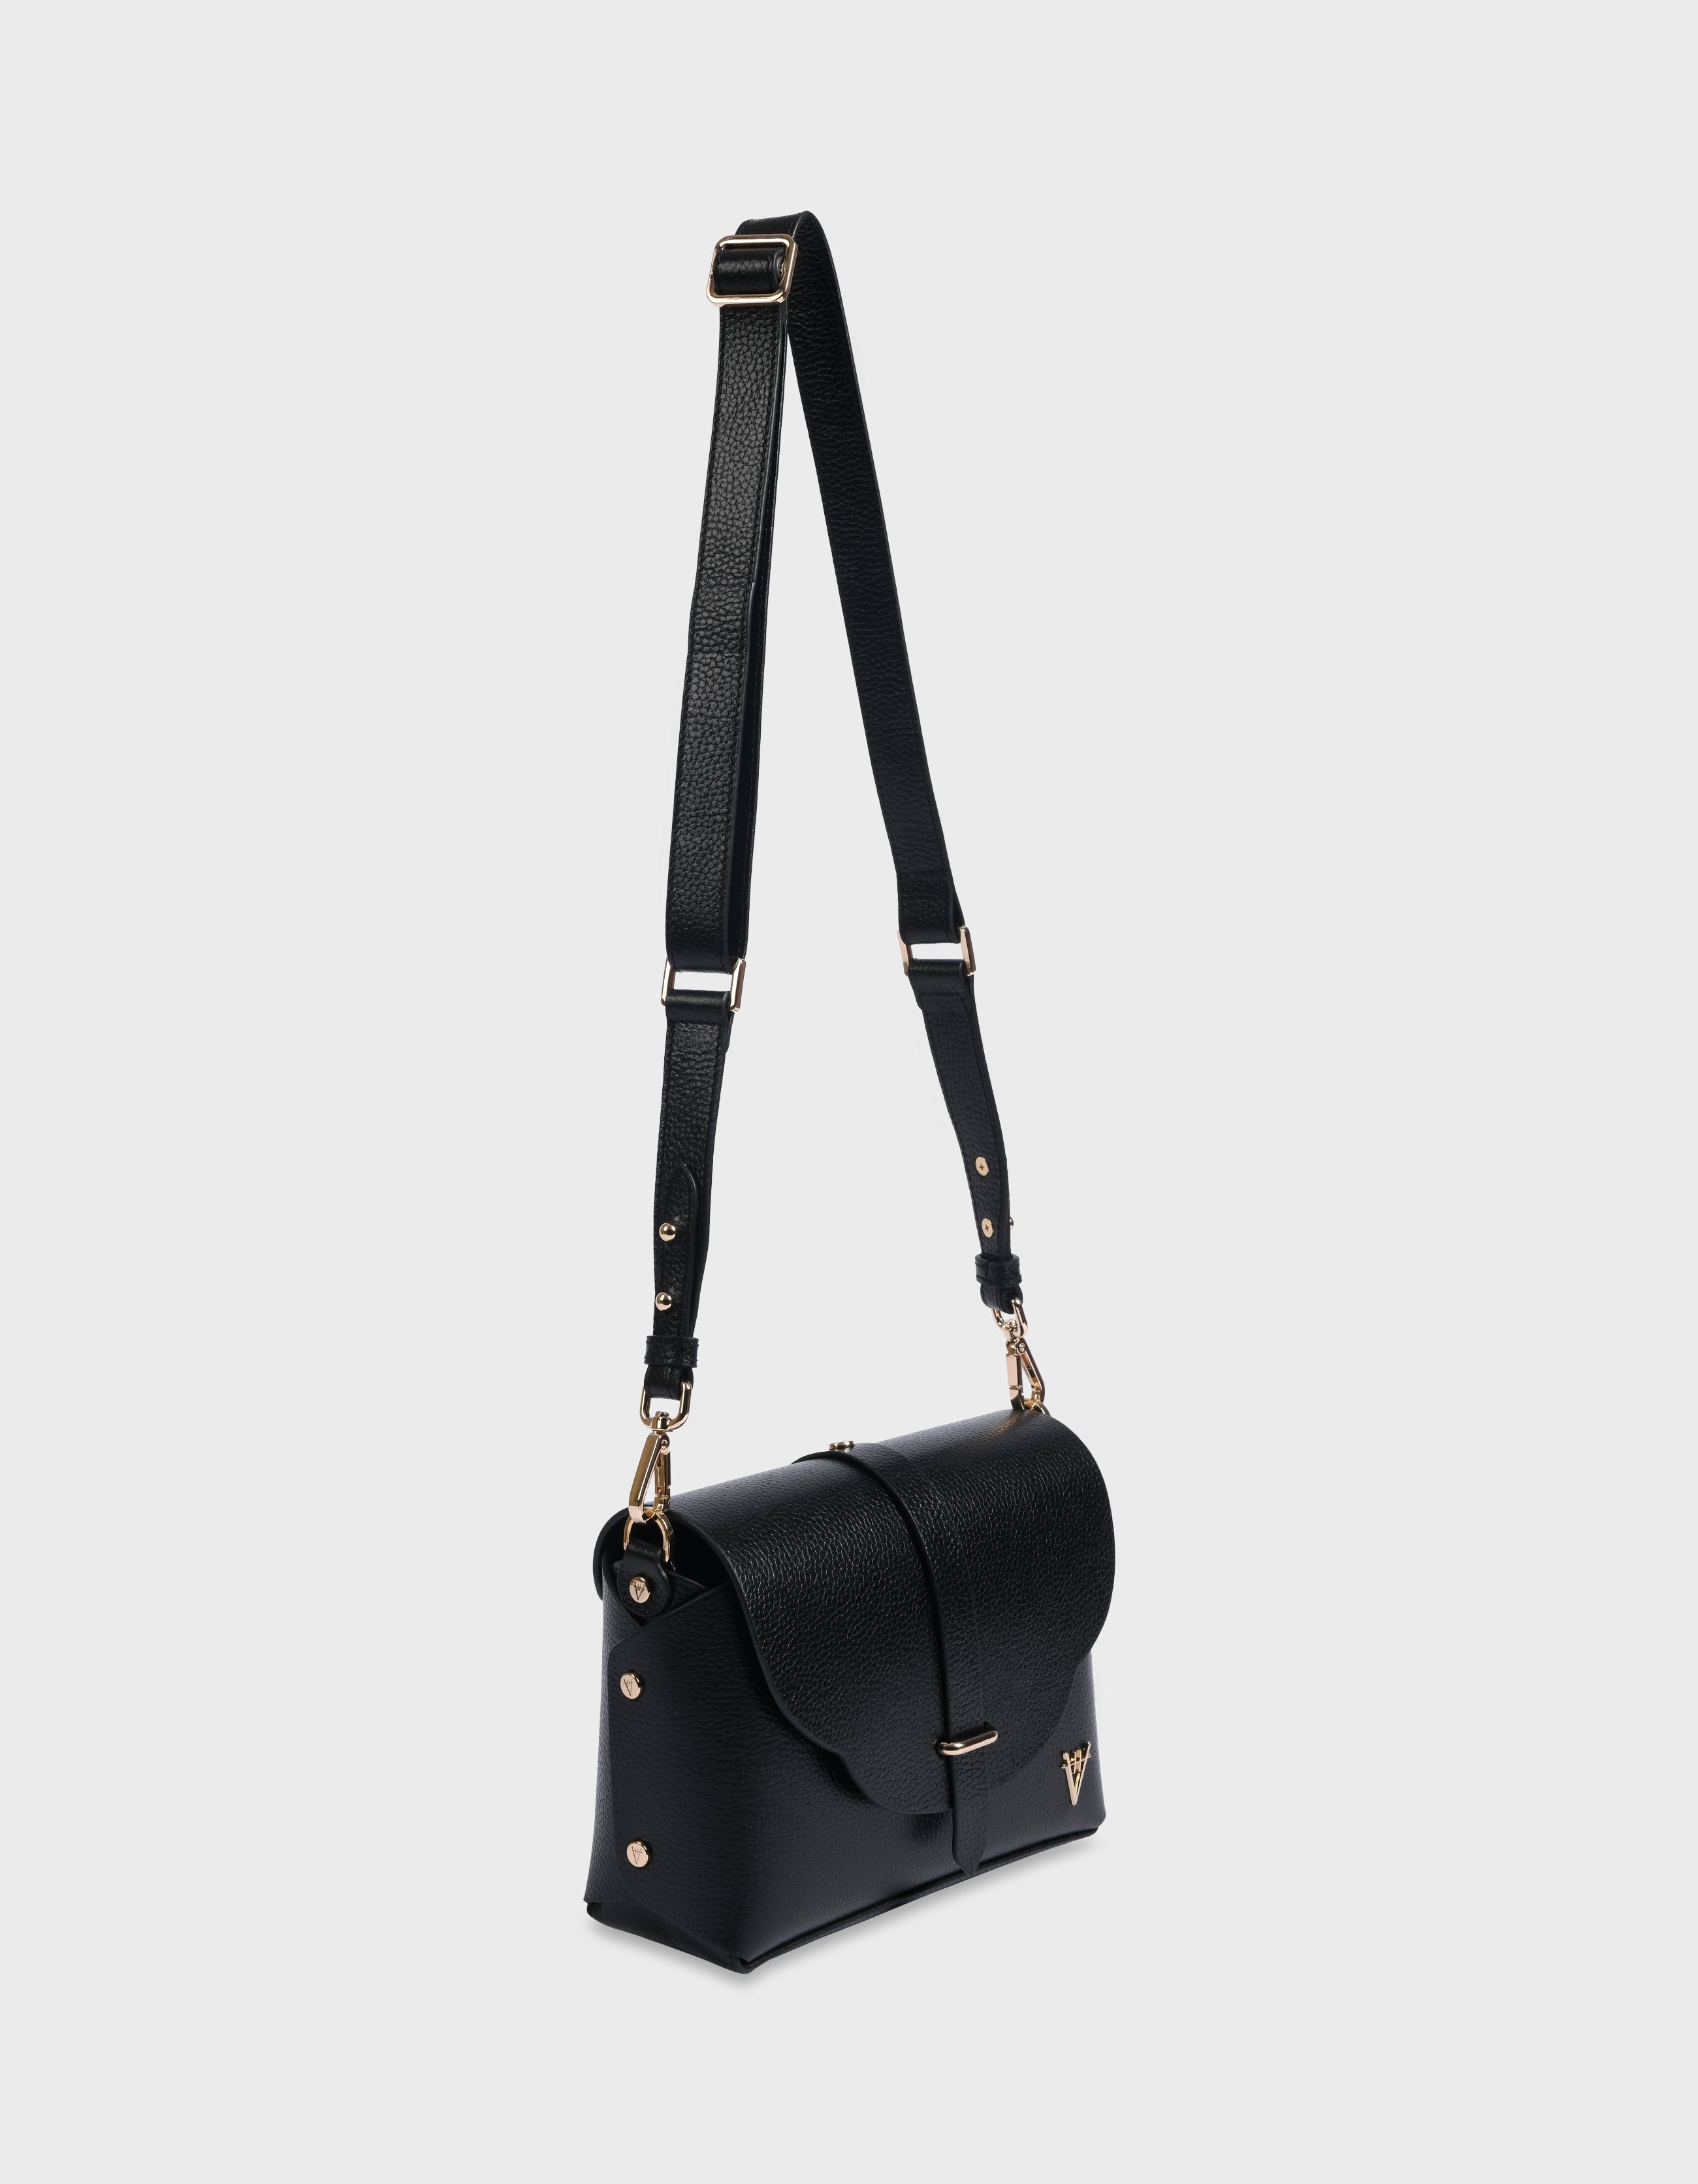 Hiva Atelier | Harmonia Shoulder Bag Black | Beautiful and Versatile